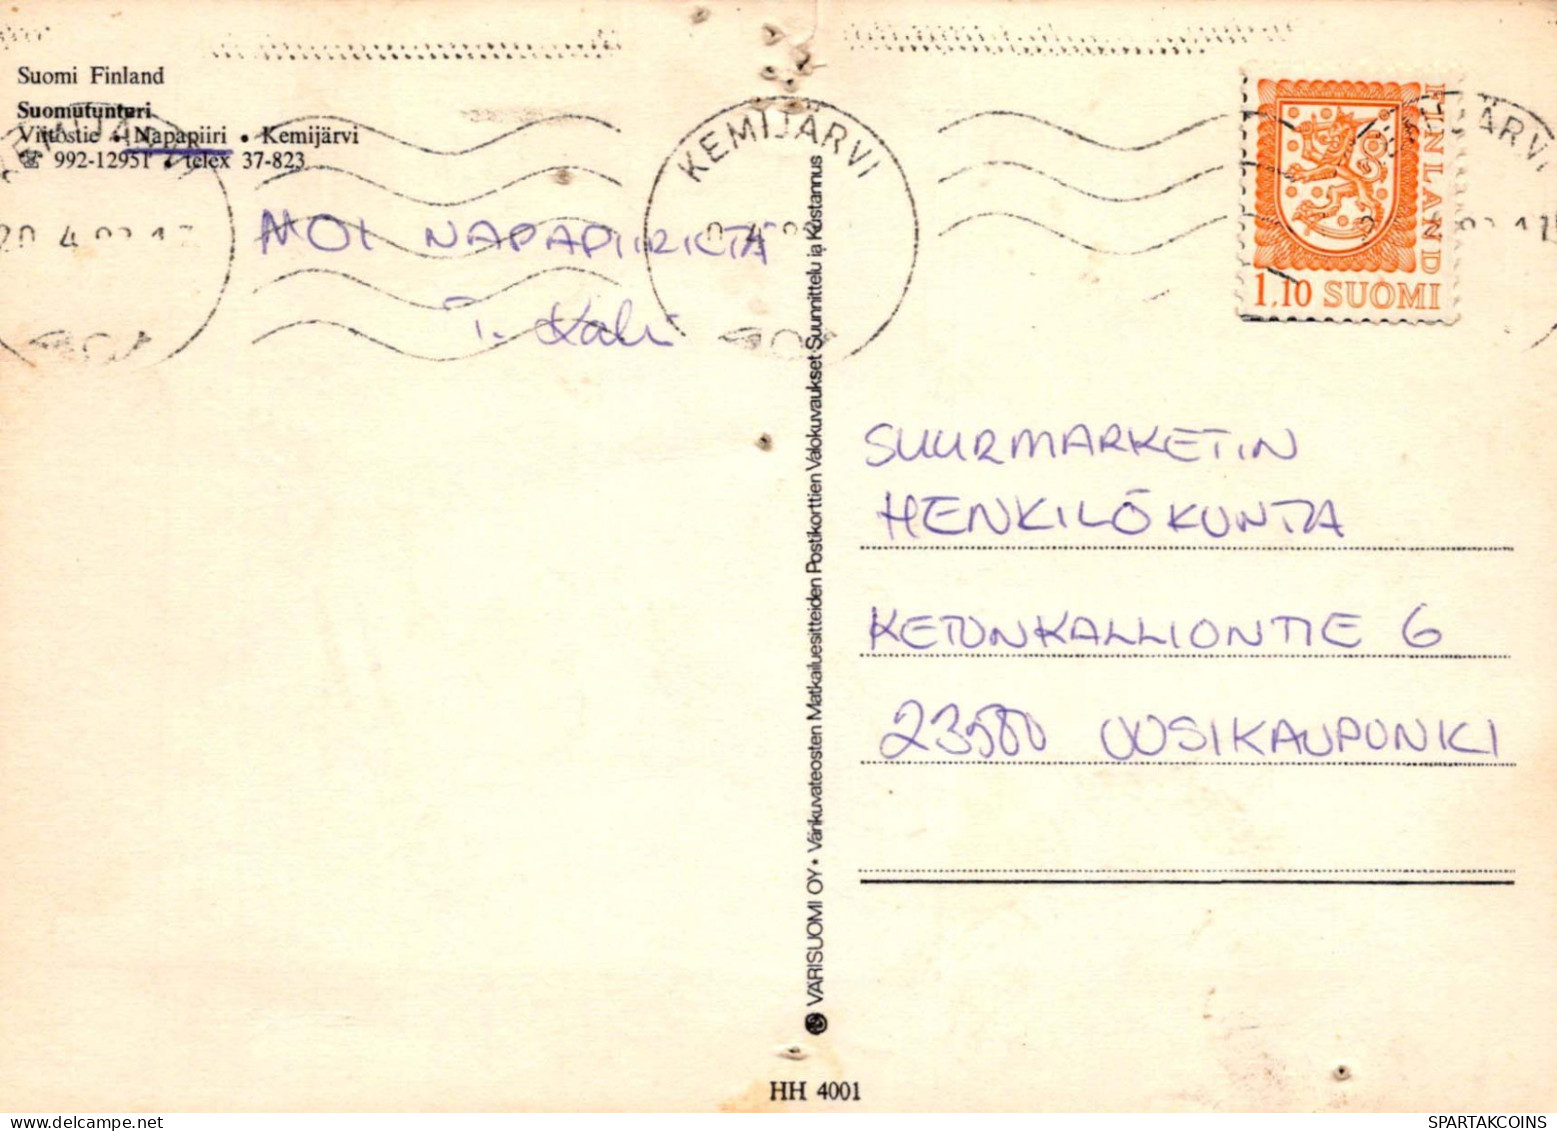 FINLANDIA Suomutunturi Suomi LENTICULAR 3D Vintage Tarjeta Postal CPSM #PAZ176.A - Finlandia